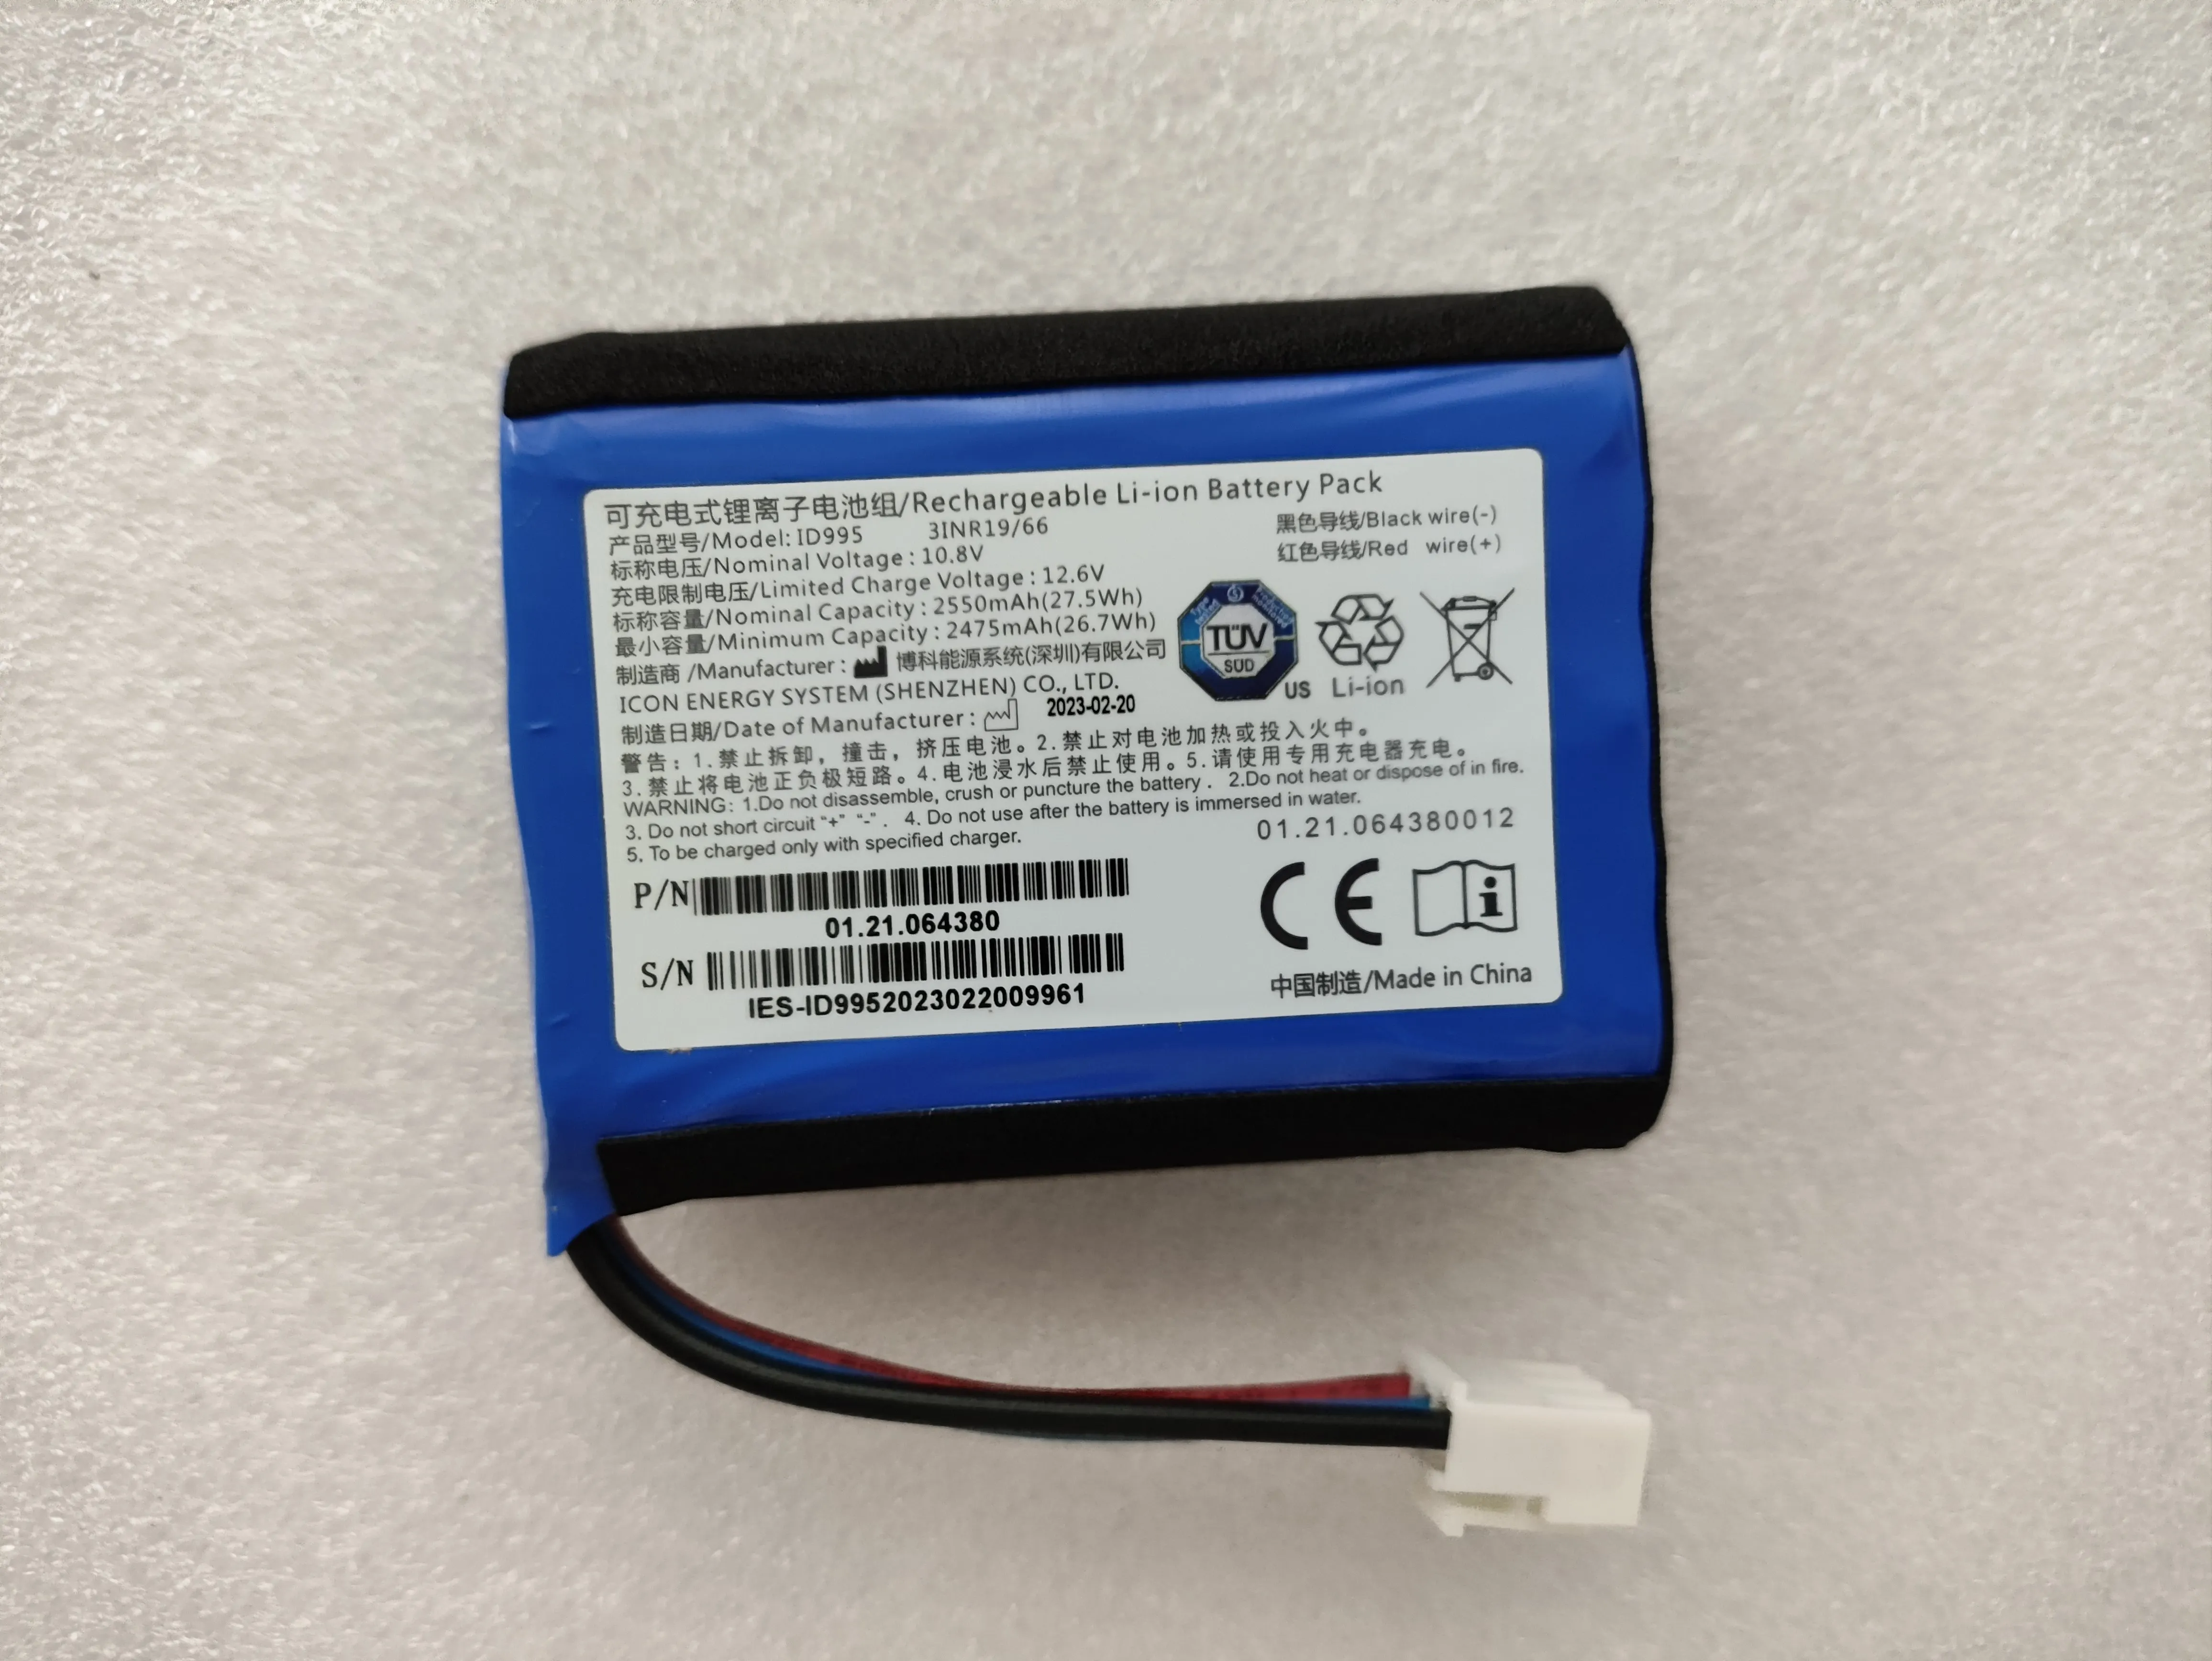 

Edan X10 Rechargeable Li-Ion Battery 10.8V 2.55Ah P/N : 01.21.064380 New, Original